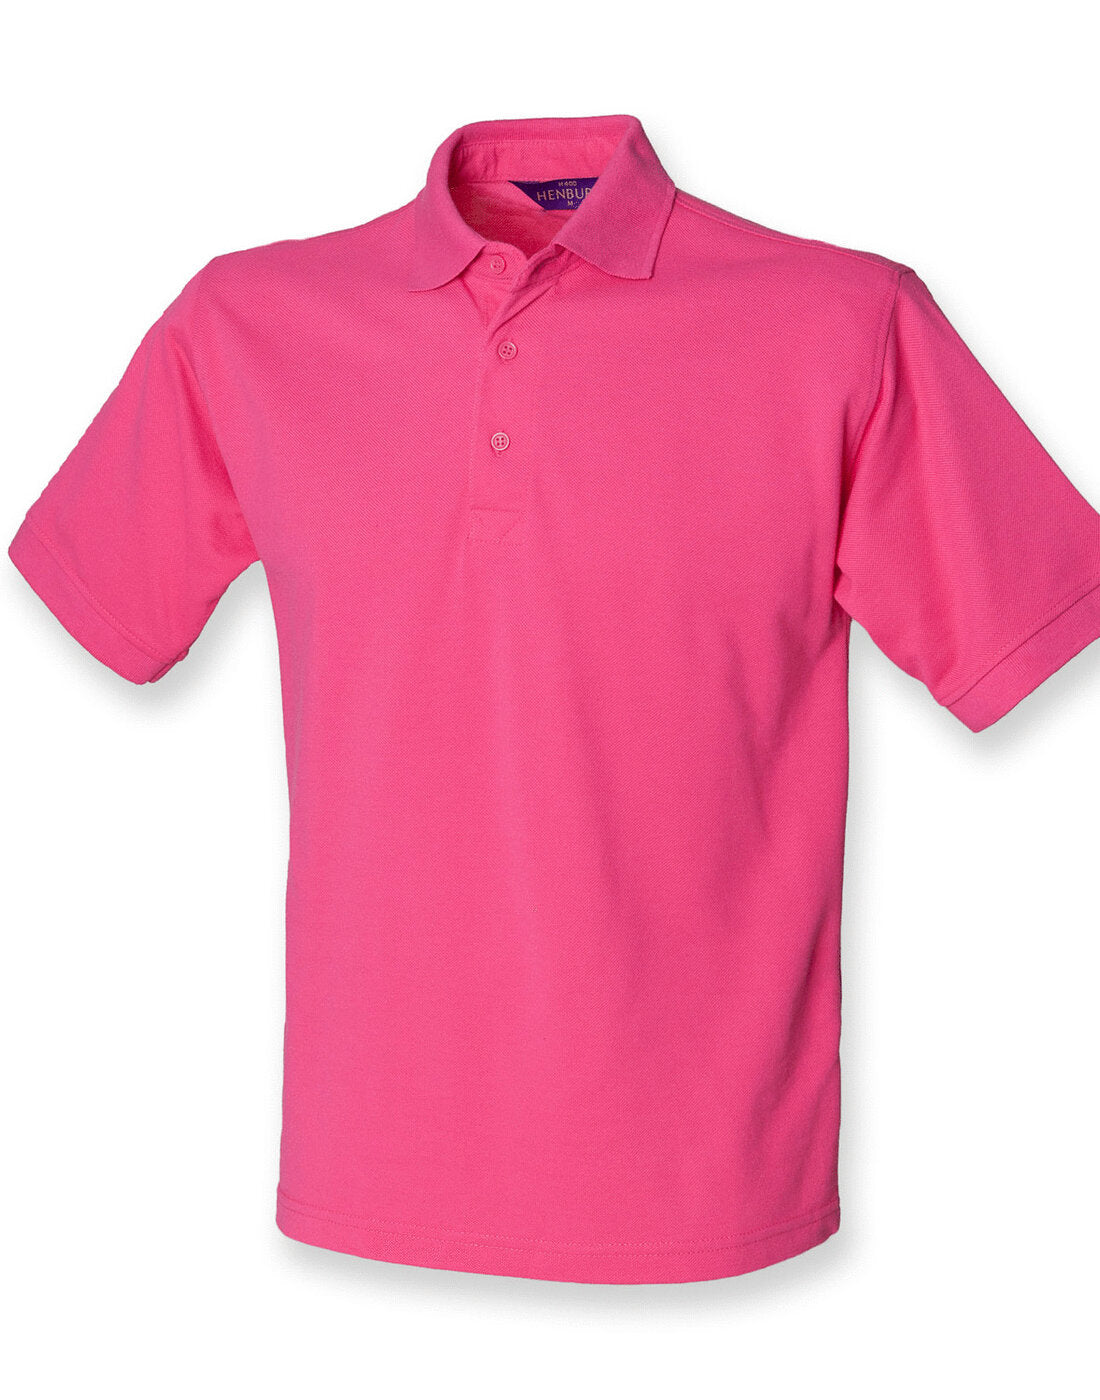 Henbury 65/35 Classic Pique Polo Shirt